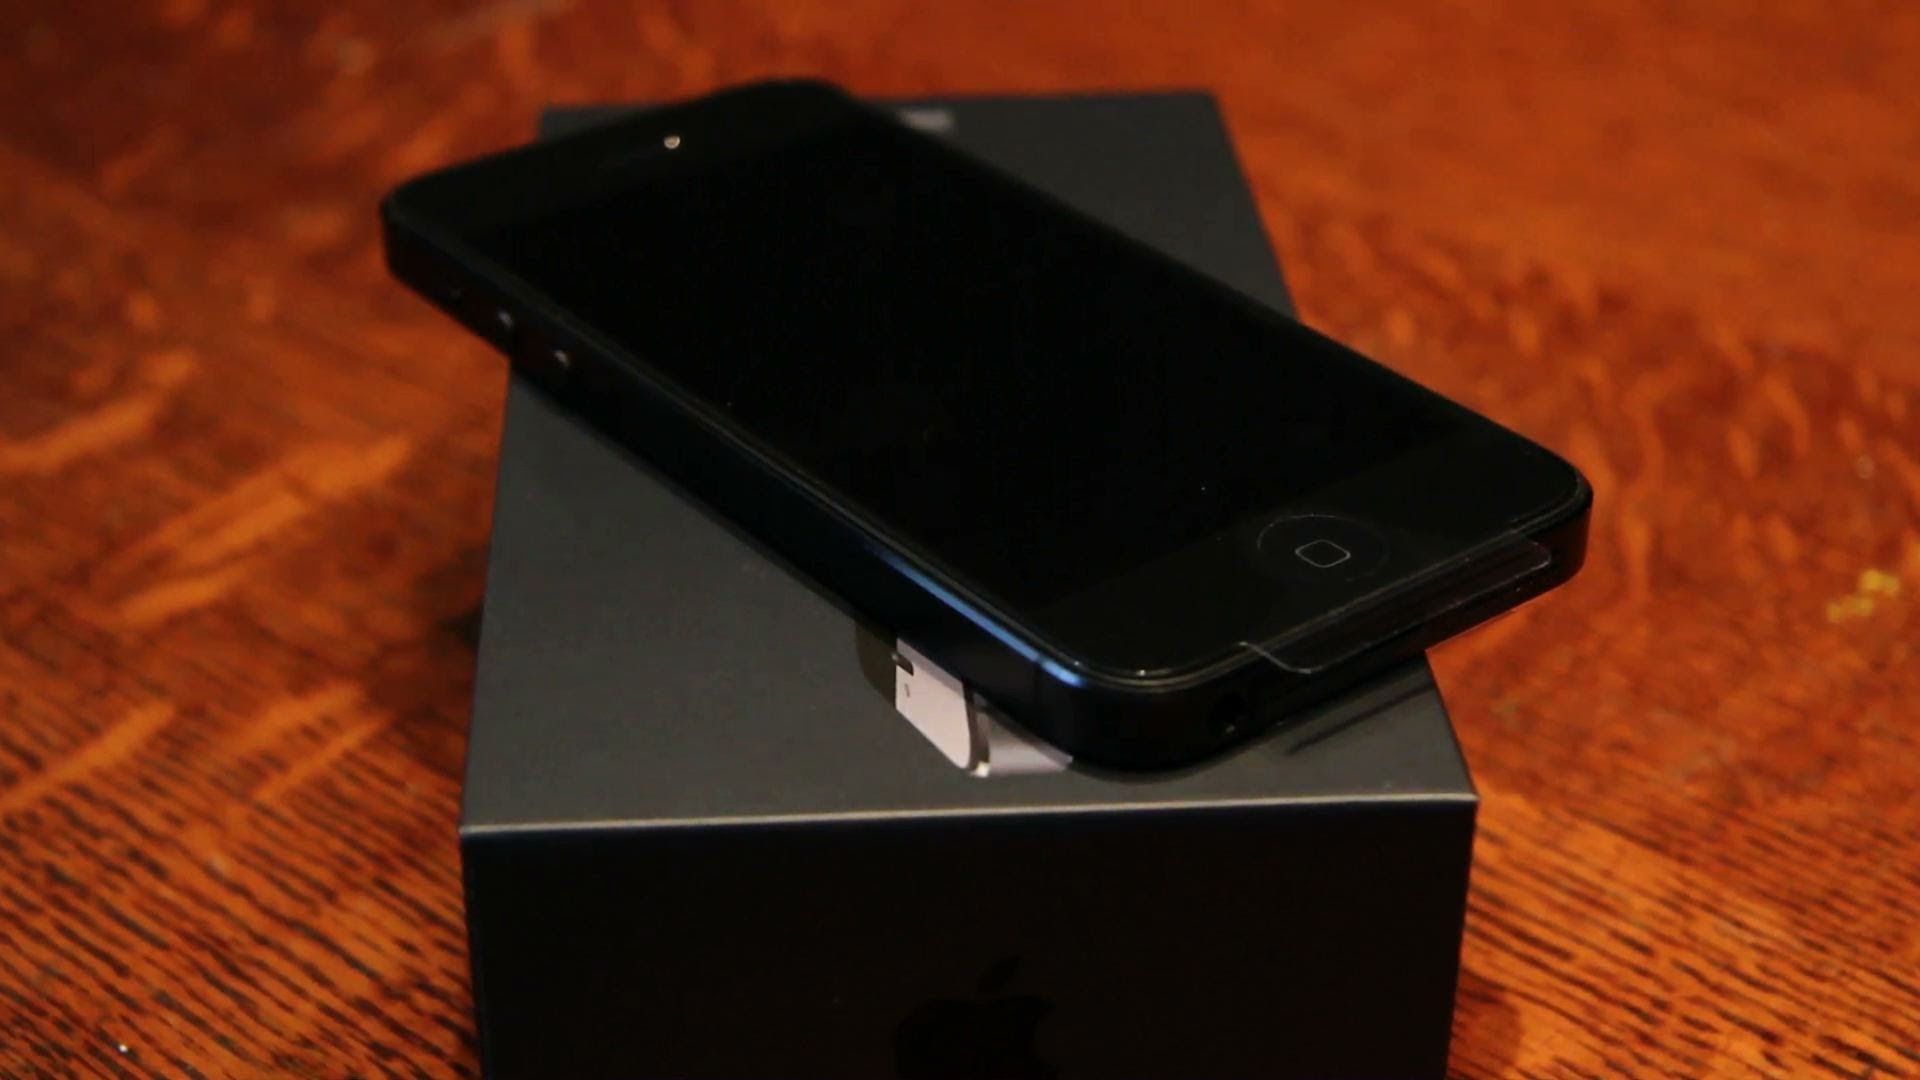 iPhone 5 Unboxing (Black) - YouTube